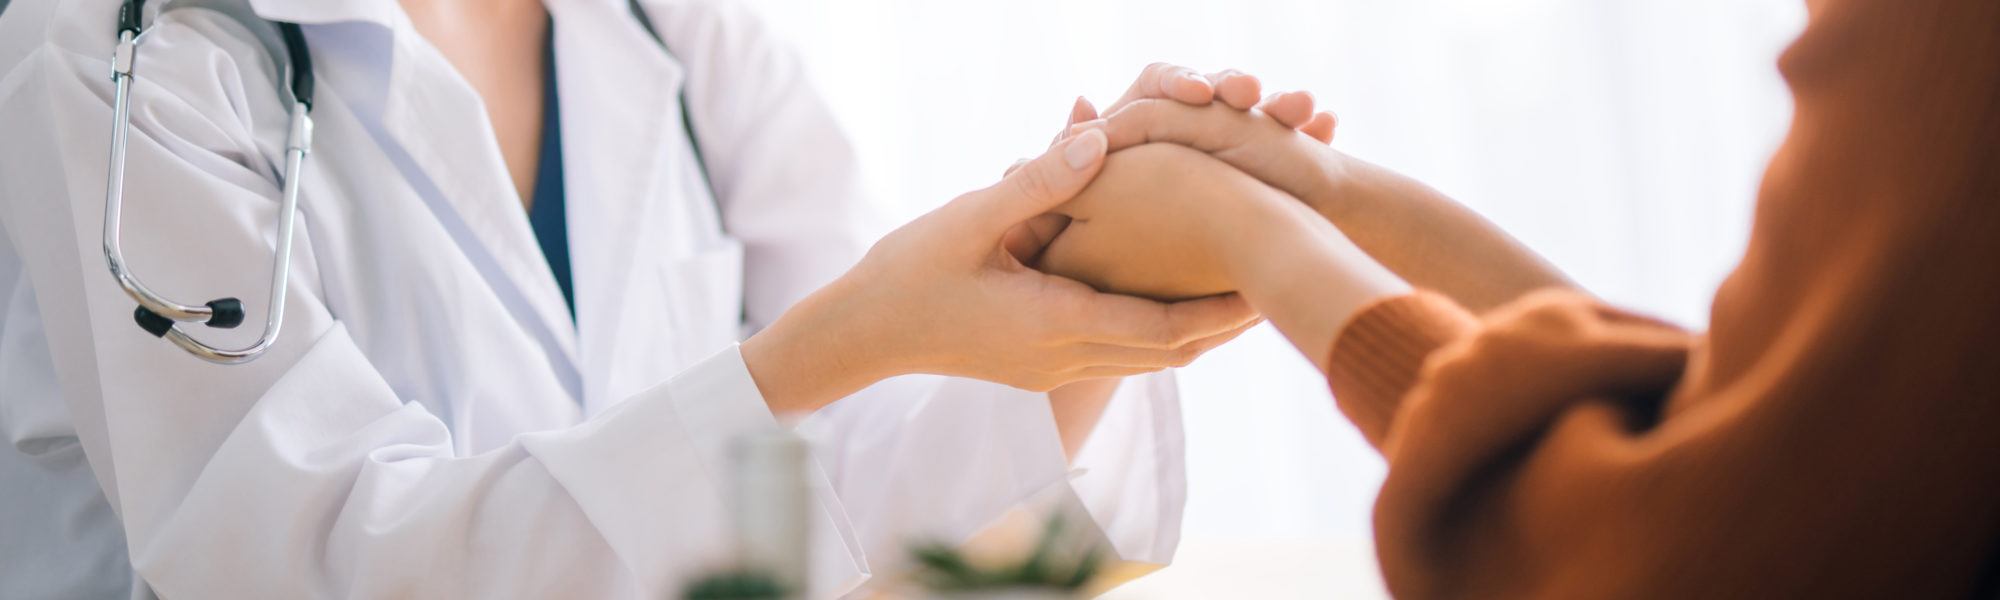 Doctor holding regenerative medicine patient's hand as reassurance